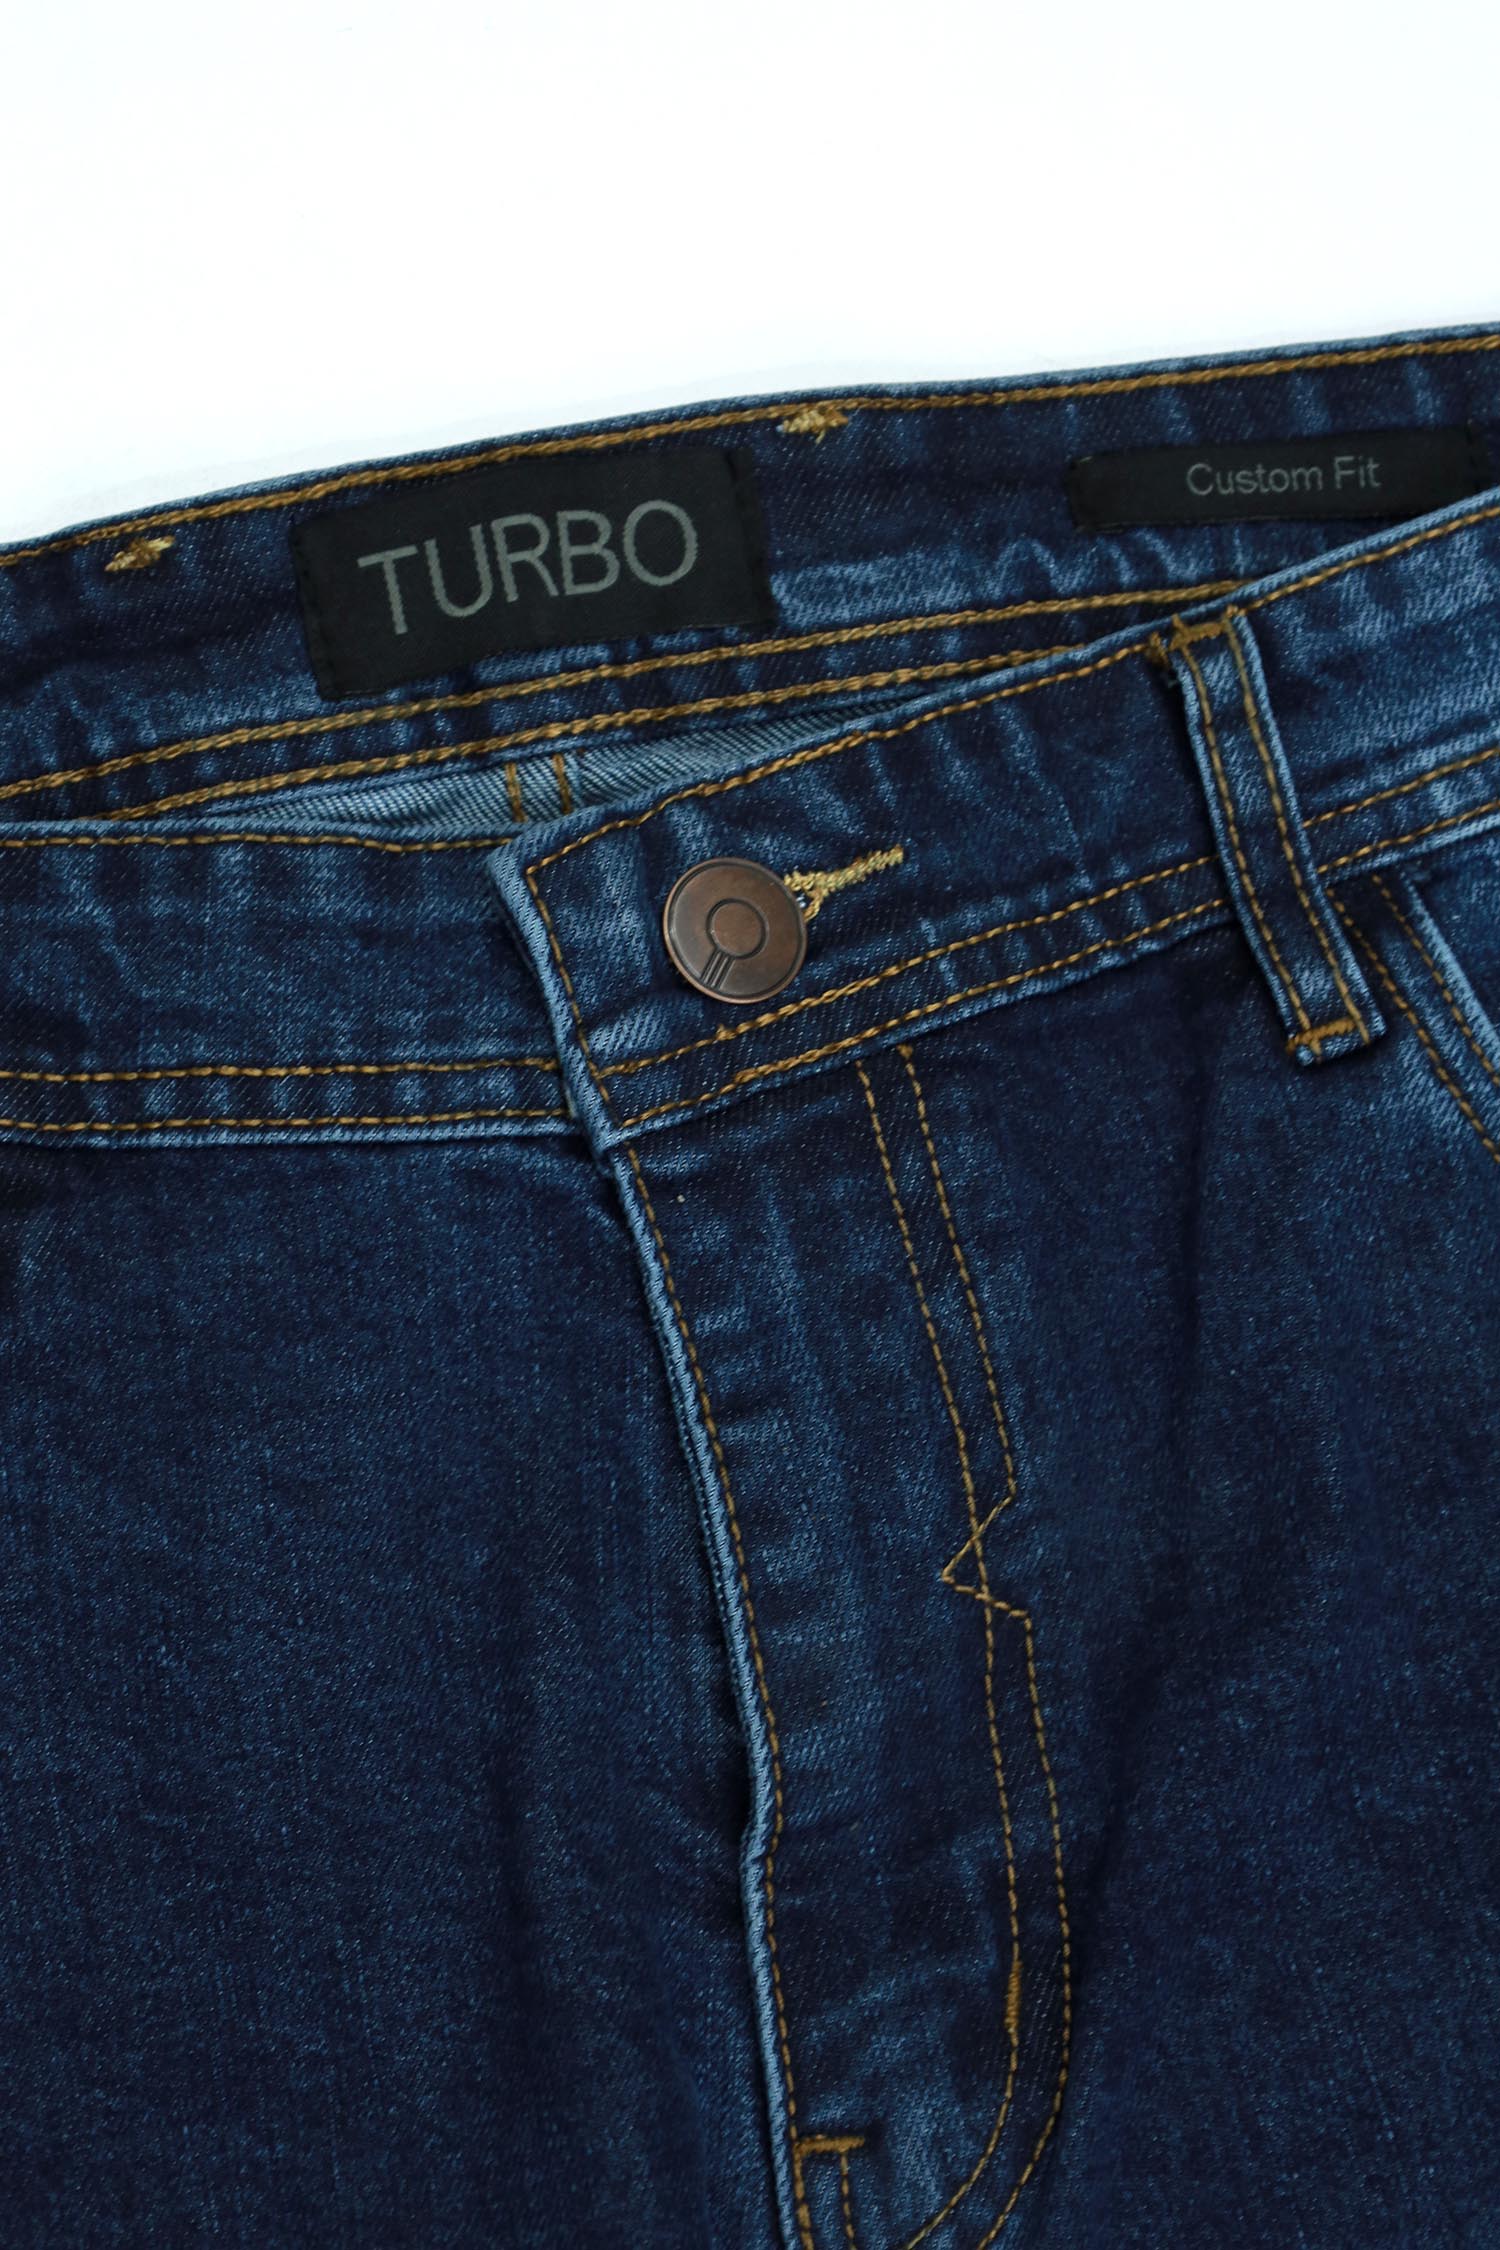 Turbo Big Size Jeans Navy Blue